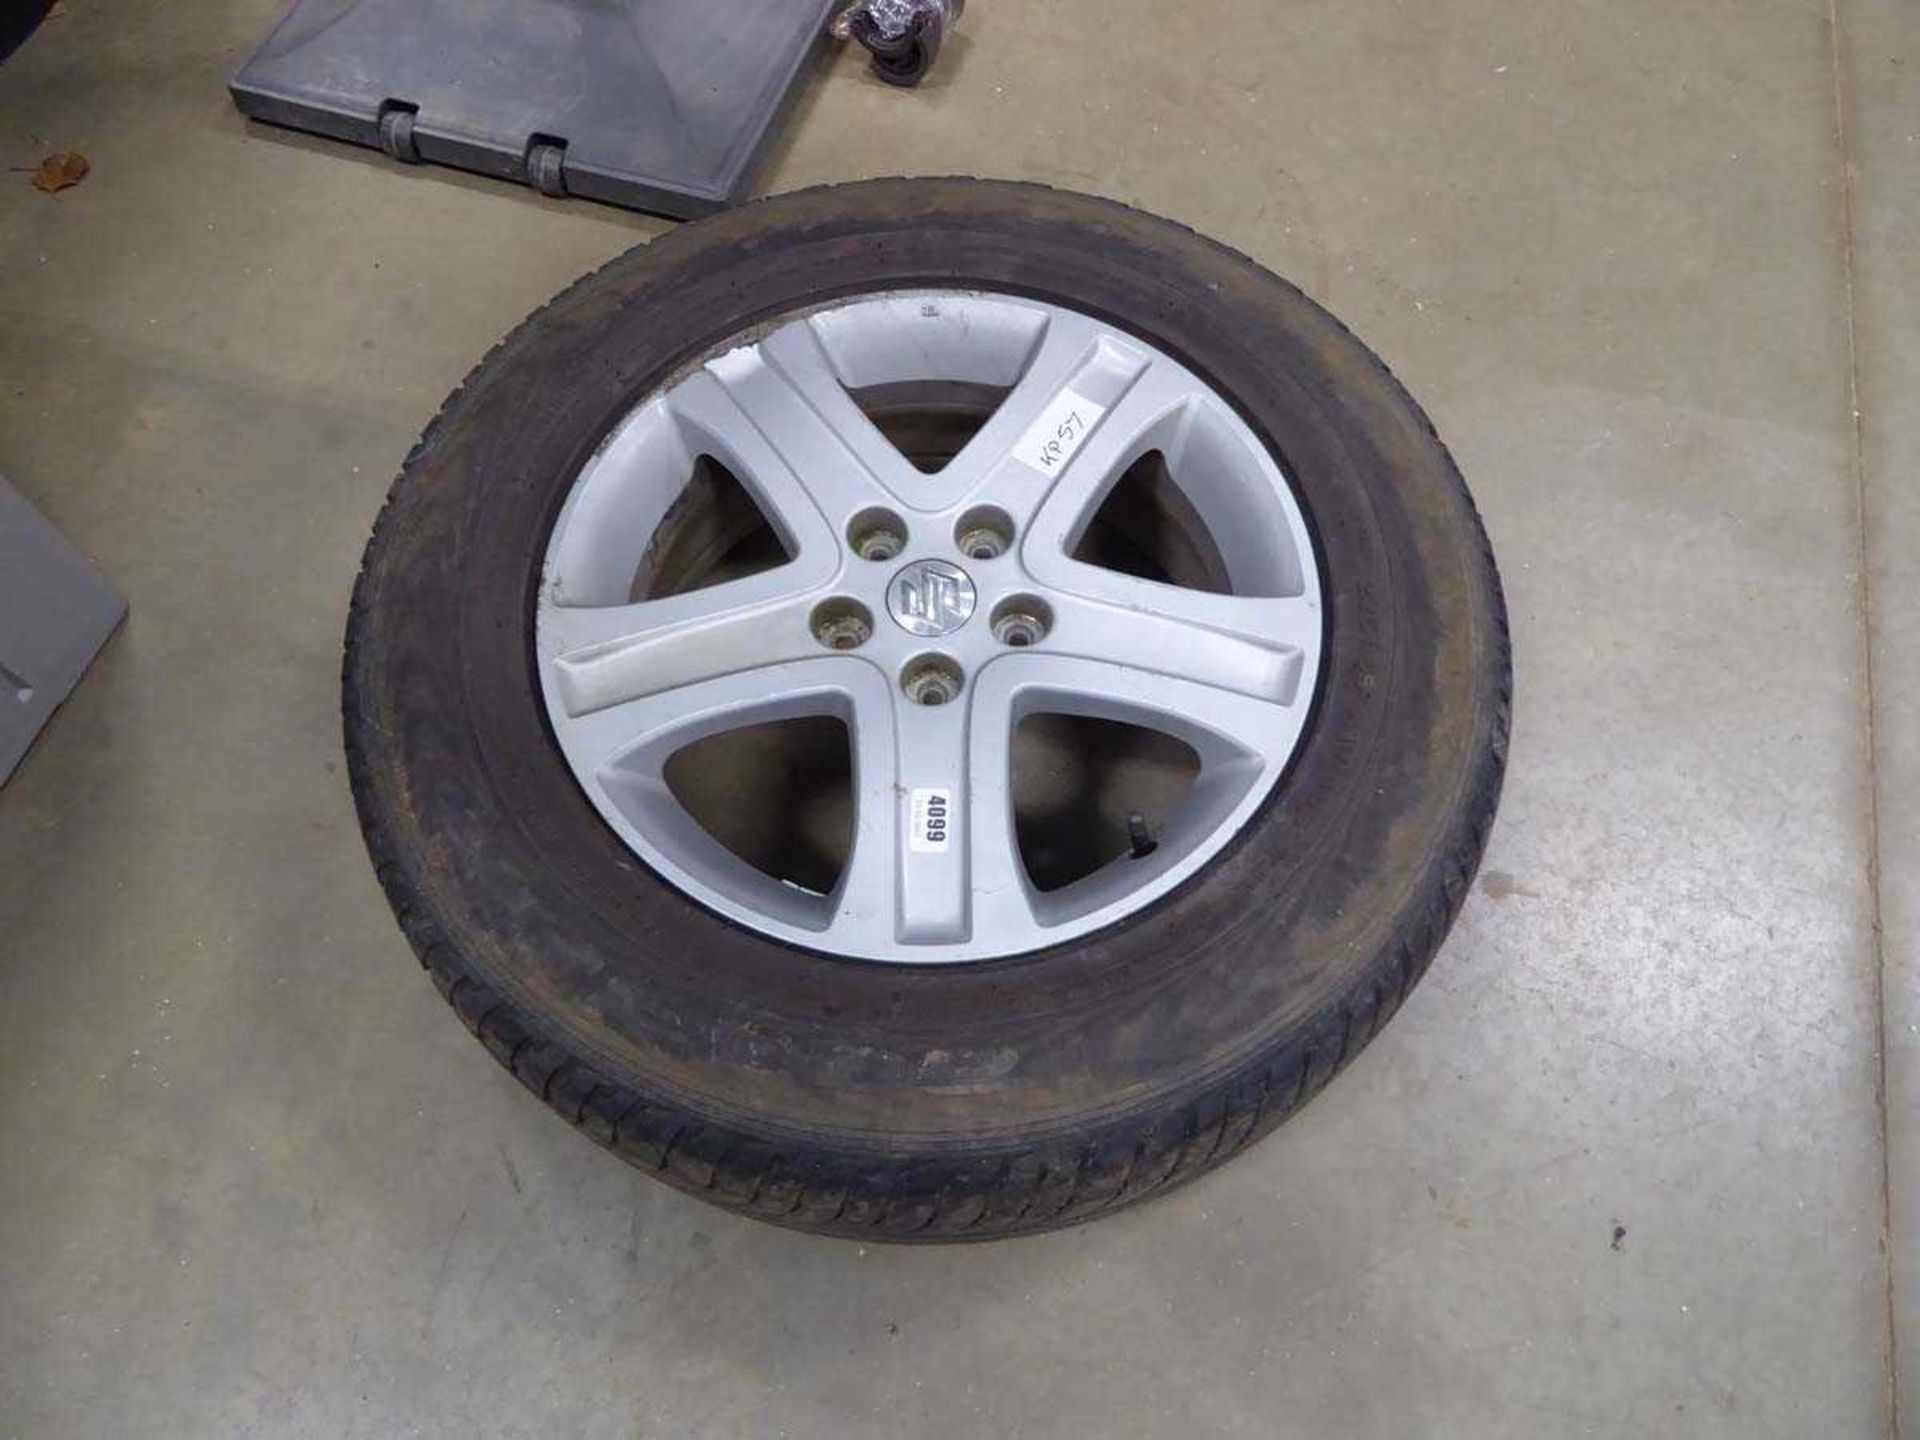 Suzuki wheel and tyre